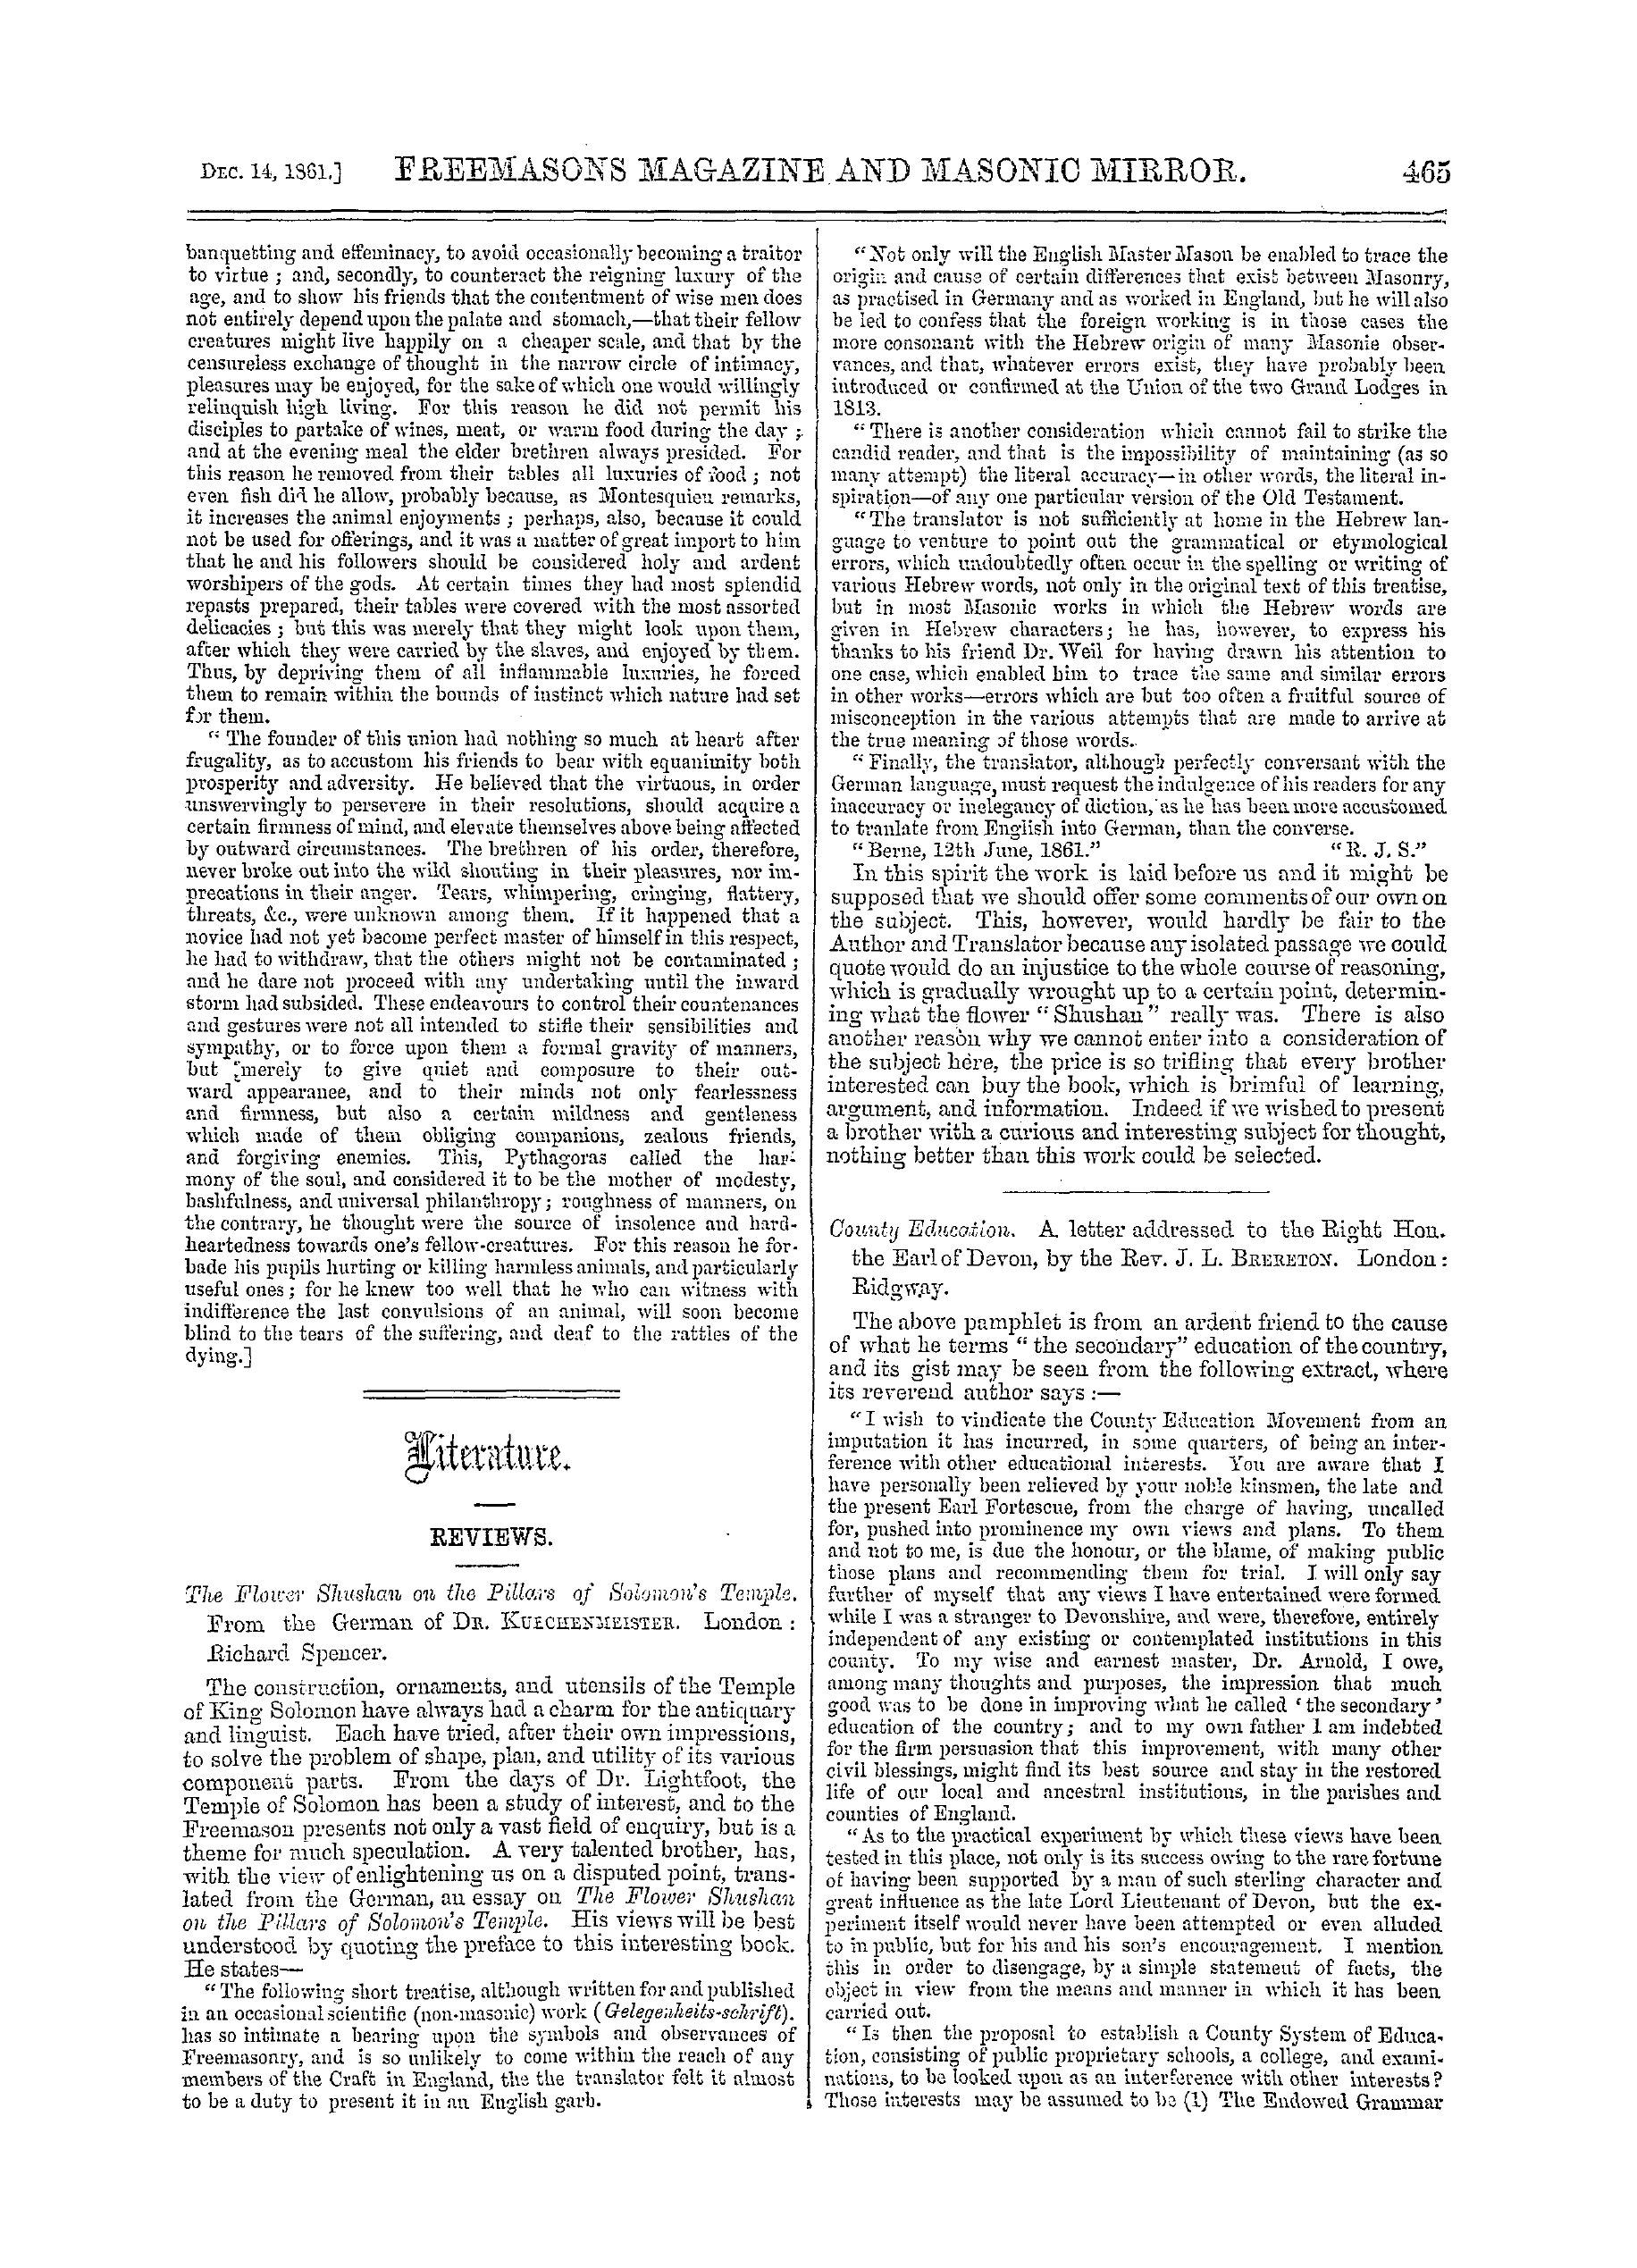 The Freemasons' Monthly Magazine: 1861-12-14 - Literature.